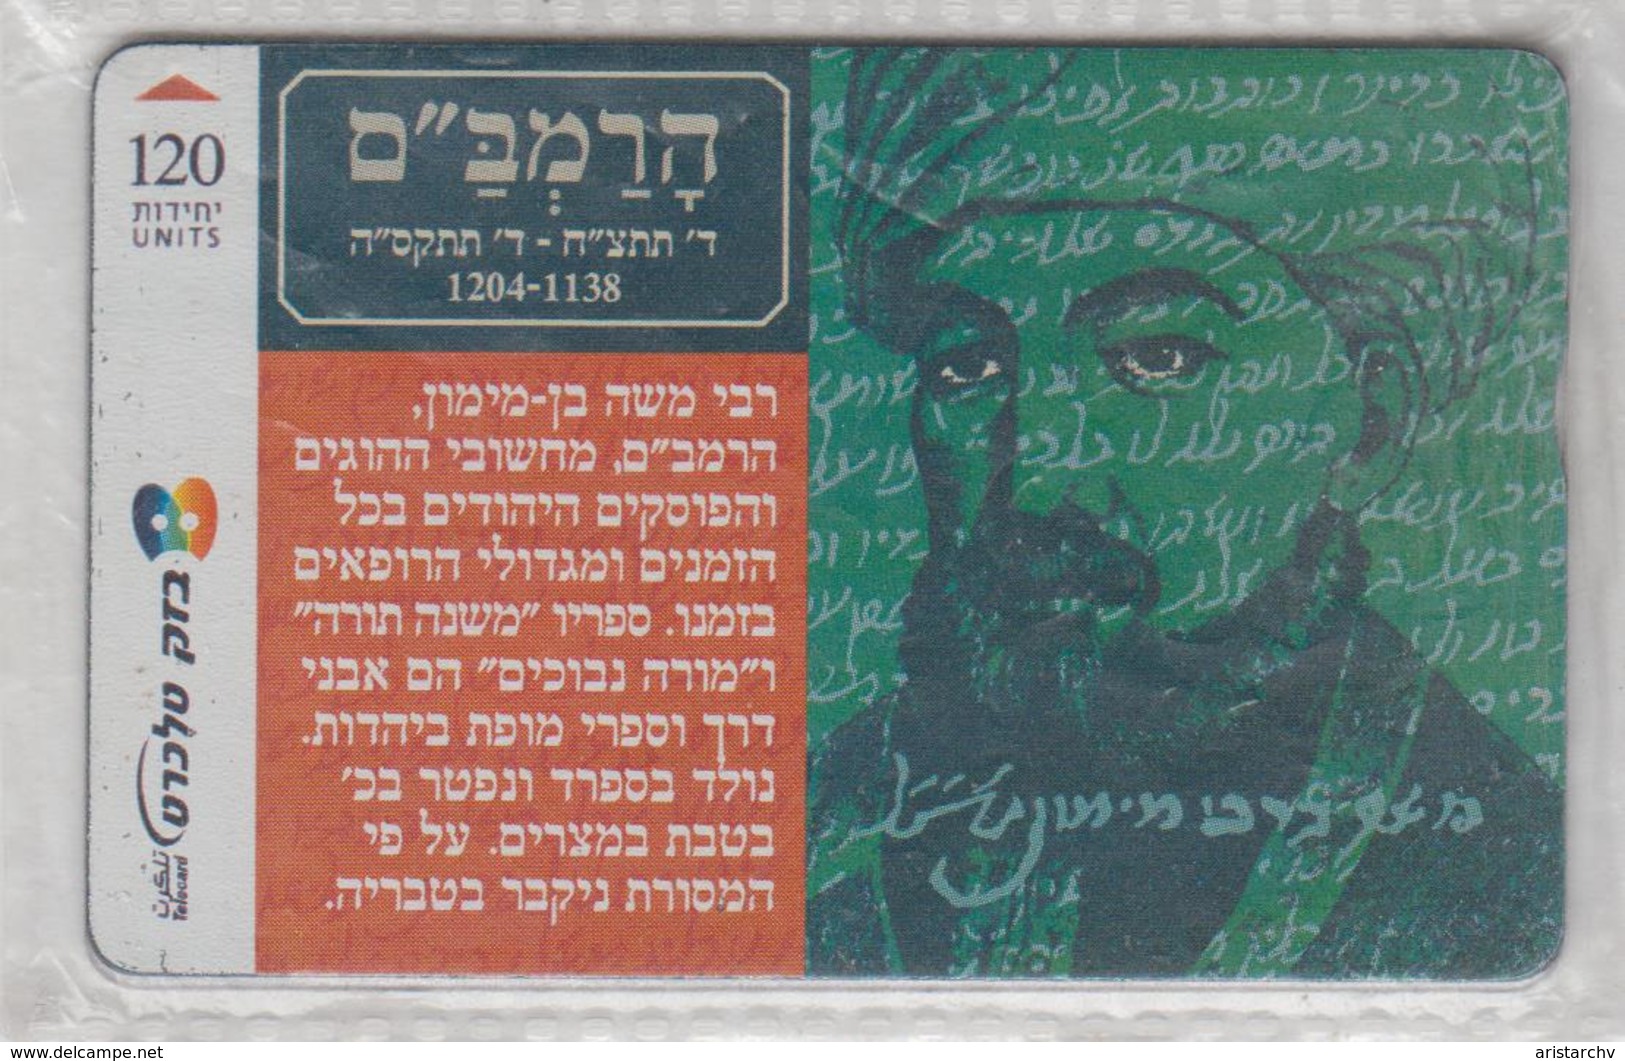 ISRAEL 2002 RAMBAM MAIMONIDES 120 UNITS USED PHONE CARD - Israele